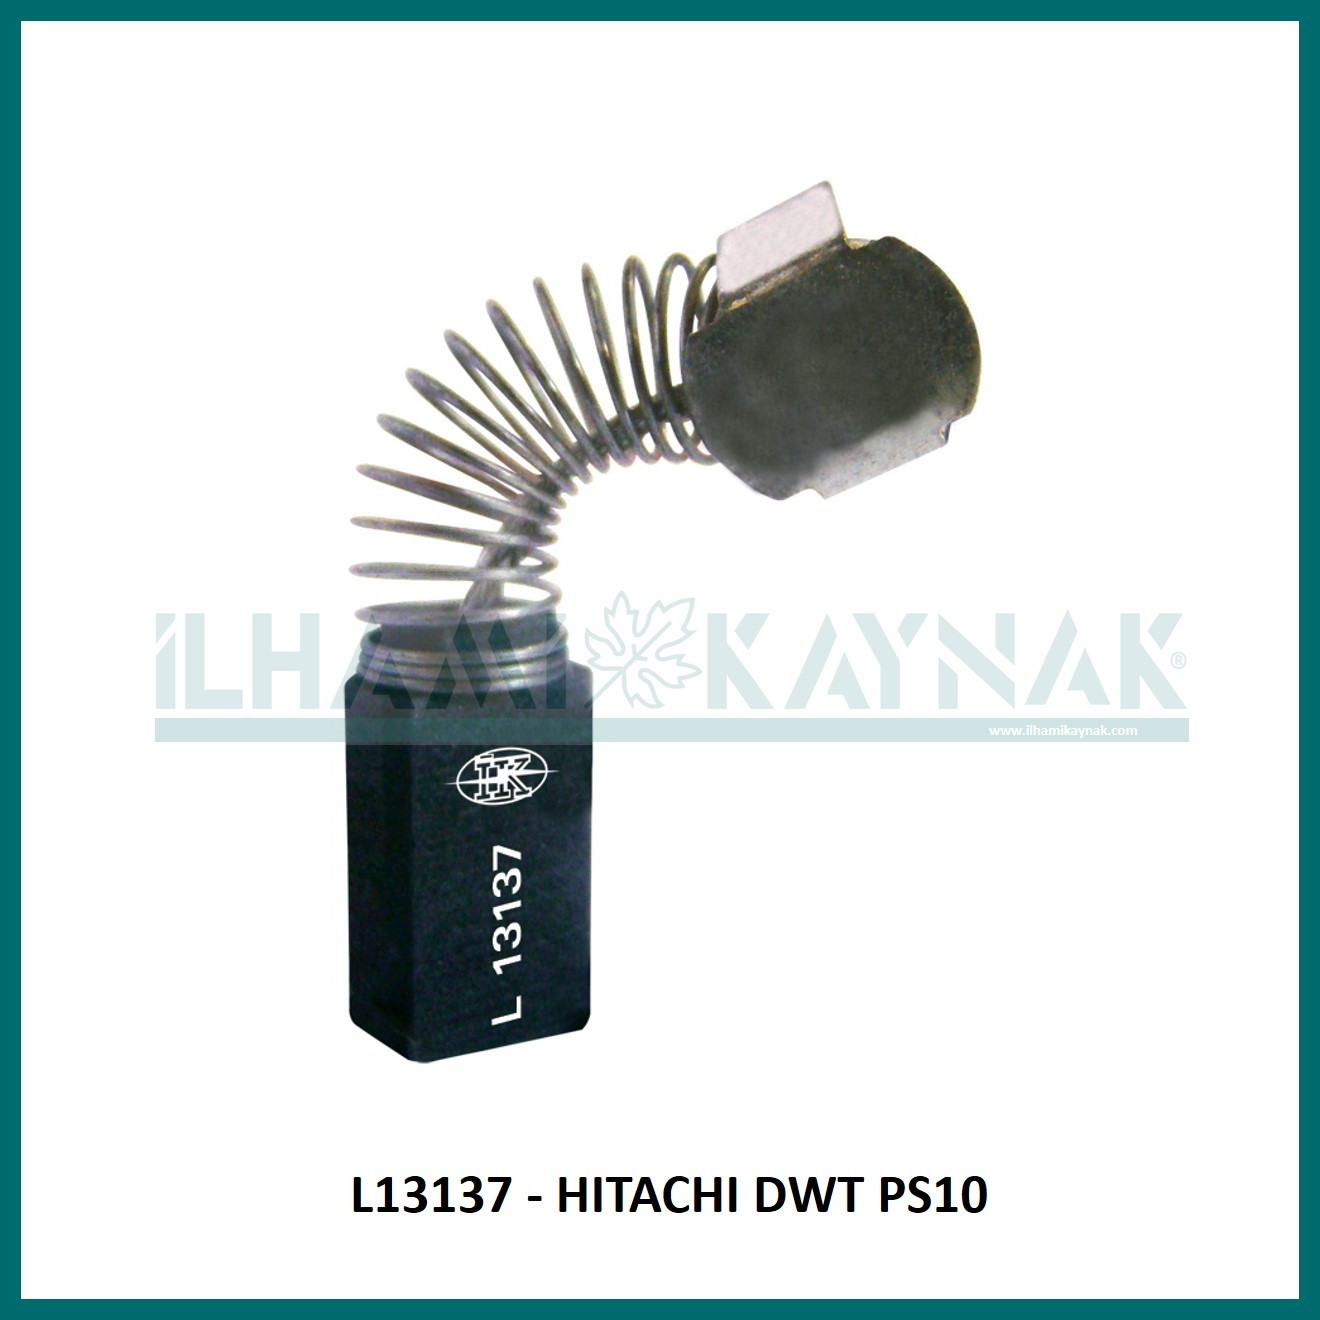 L13137 - HITACHI DWT PS10 - 6,3*11*21 mm - Minimum Satın Alım: 10 Adet.